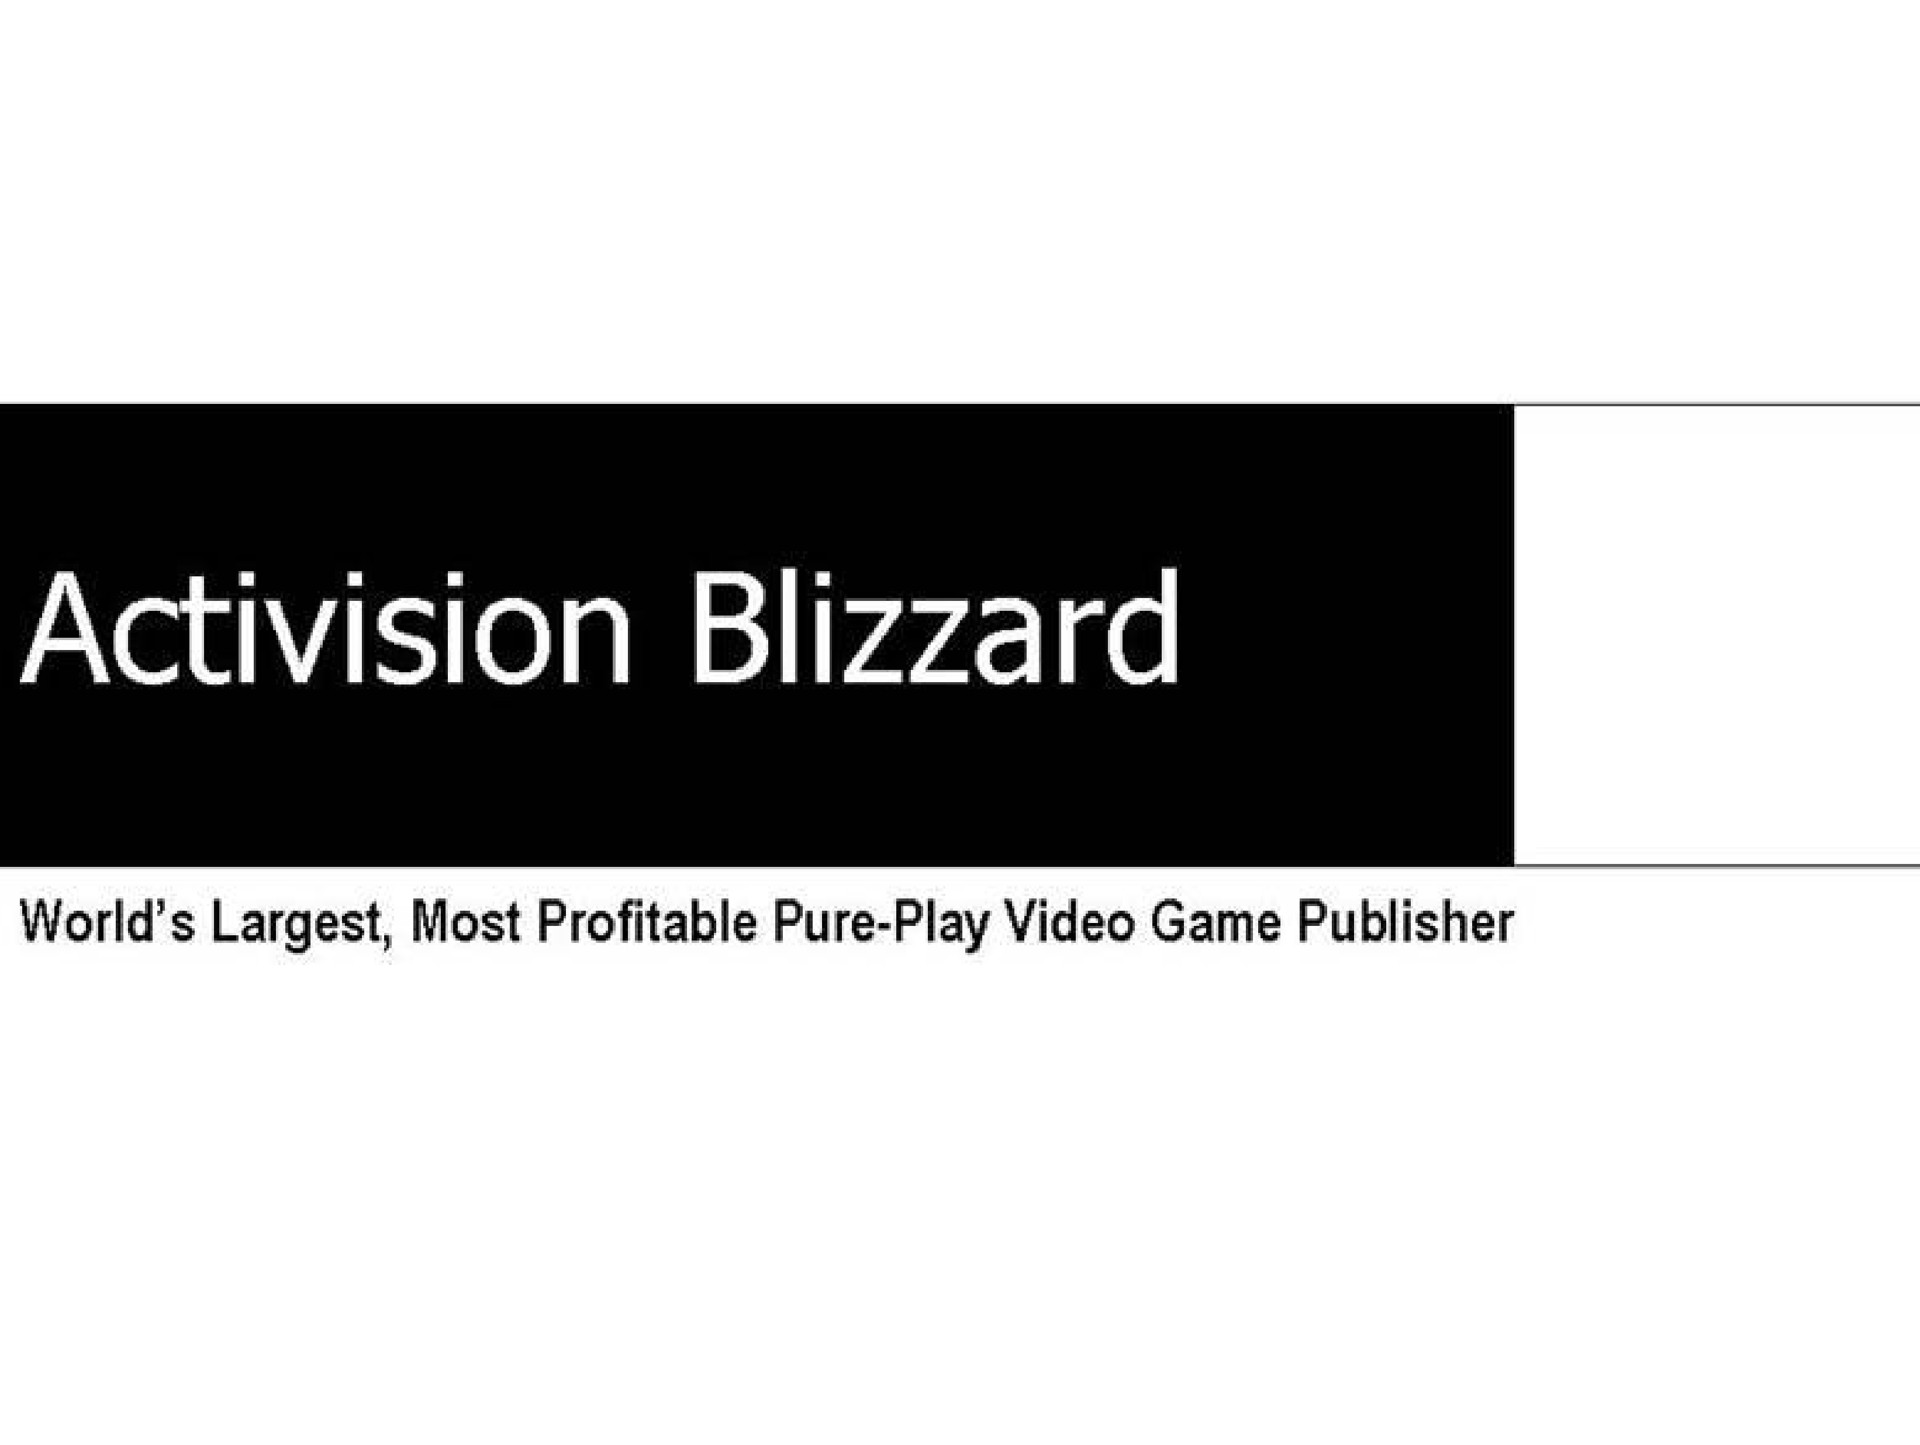 blizzard | Activision Blizzard